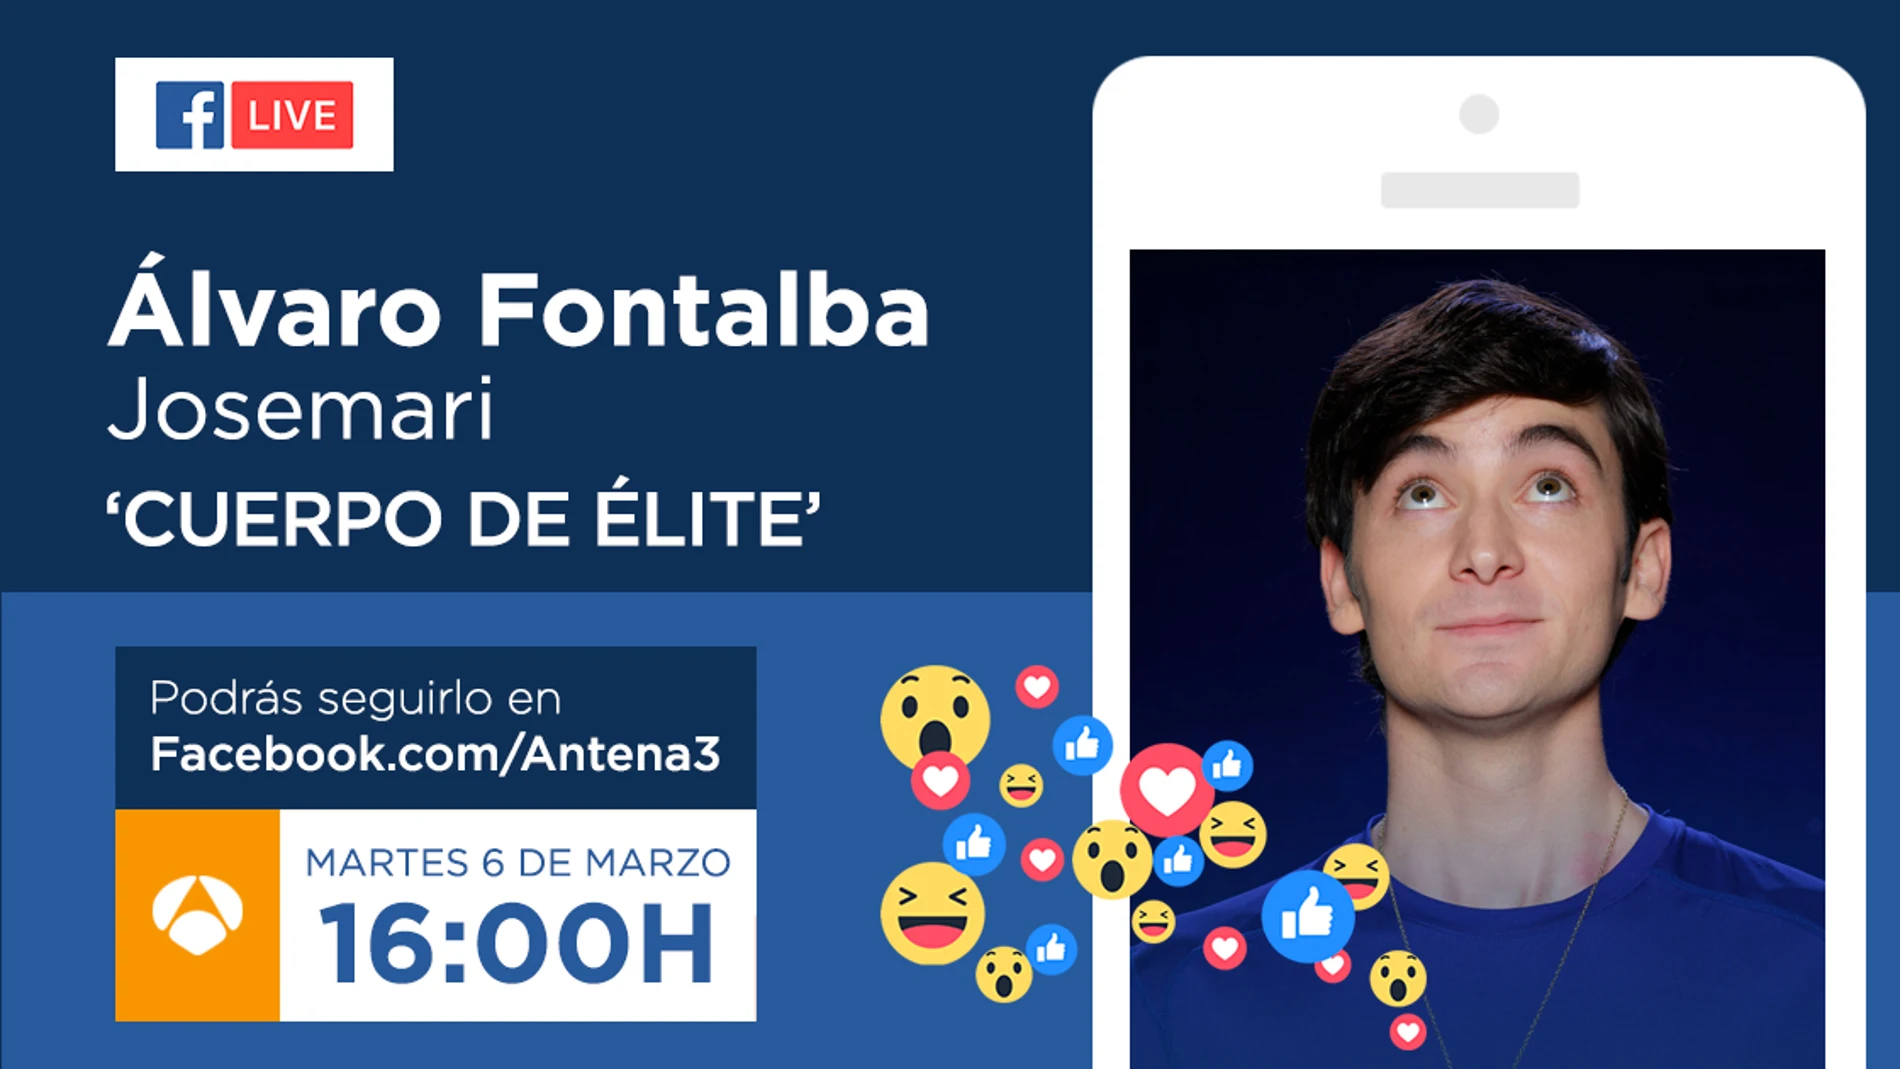 Álvaro Fontalba, Josemari en 'Cuerpo de Élite', estará mañana en directo a través de Facebook Live